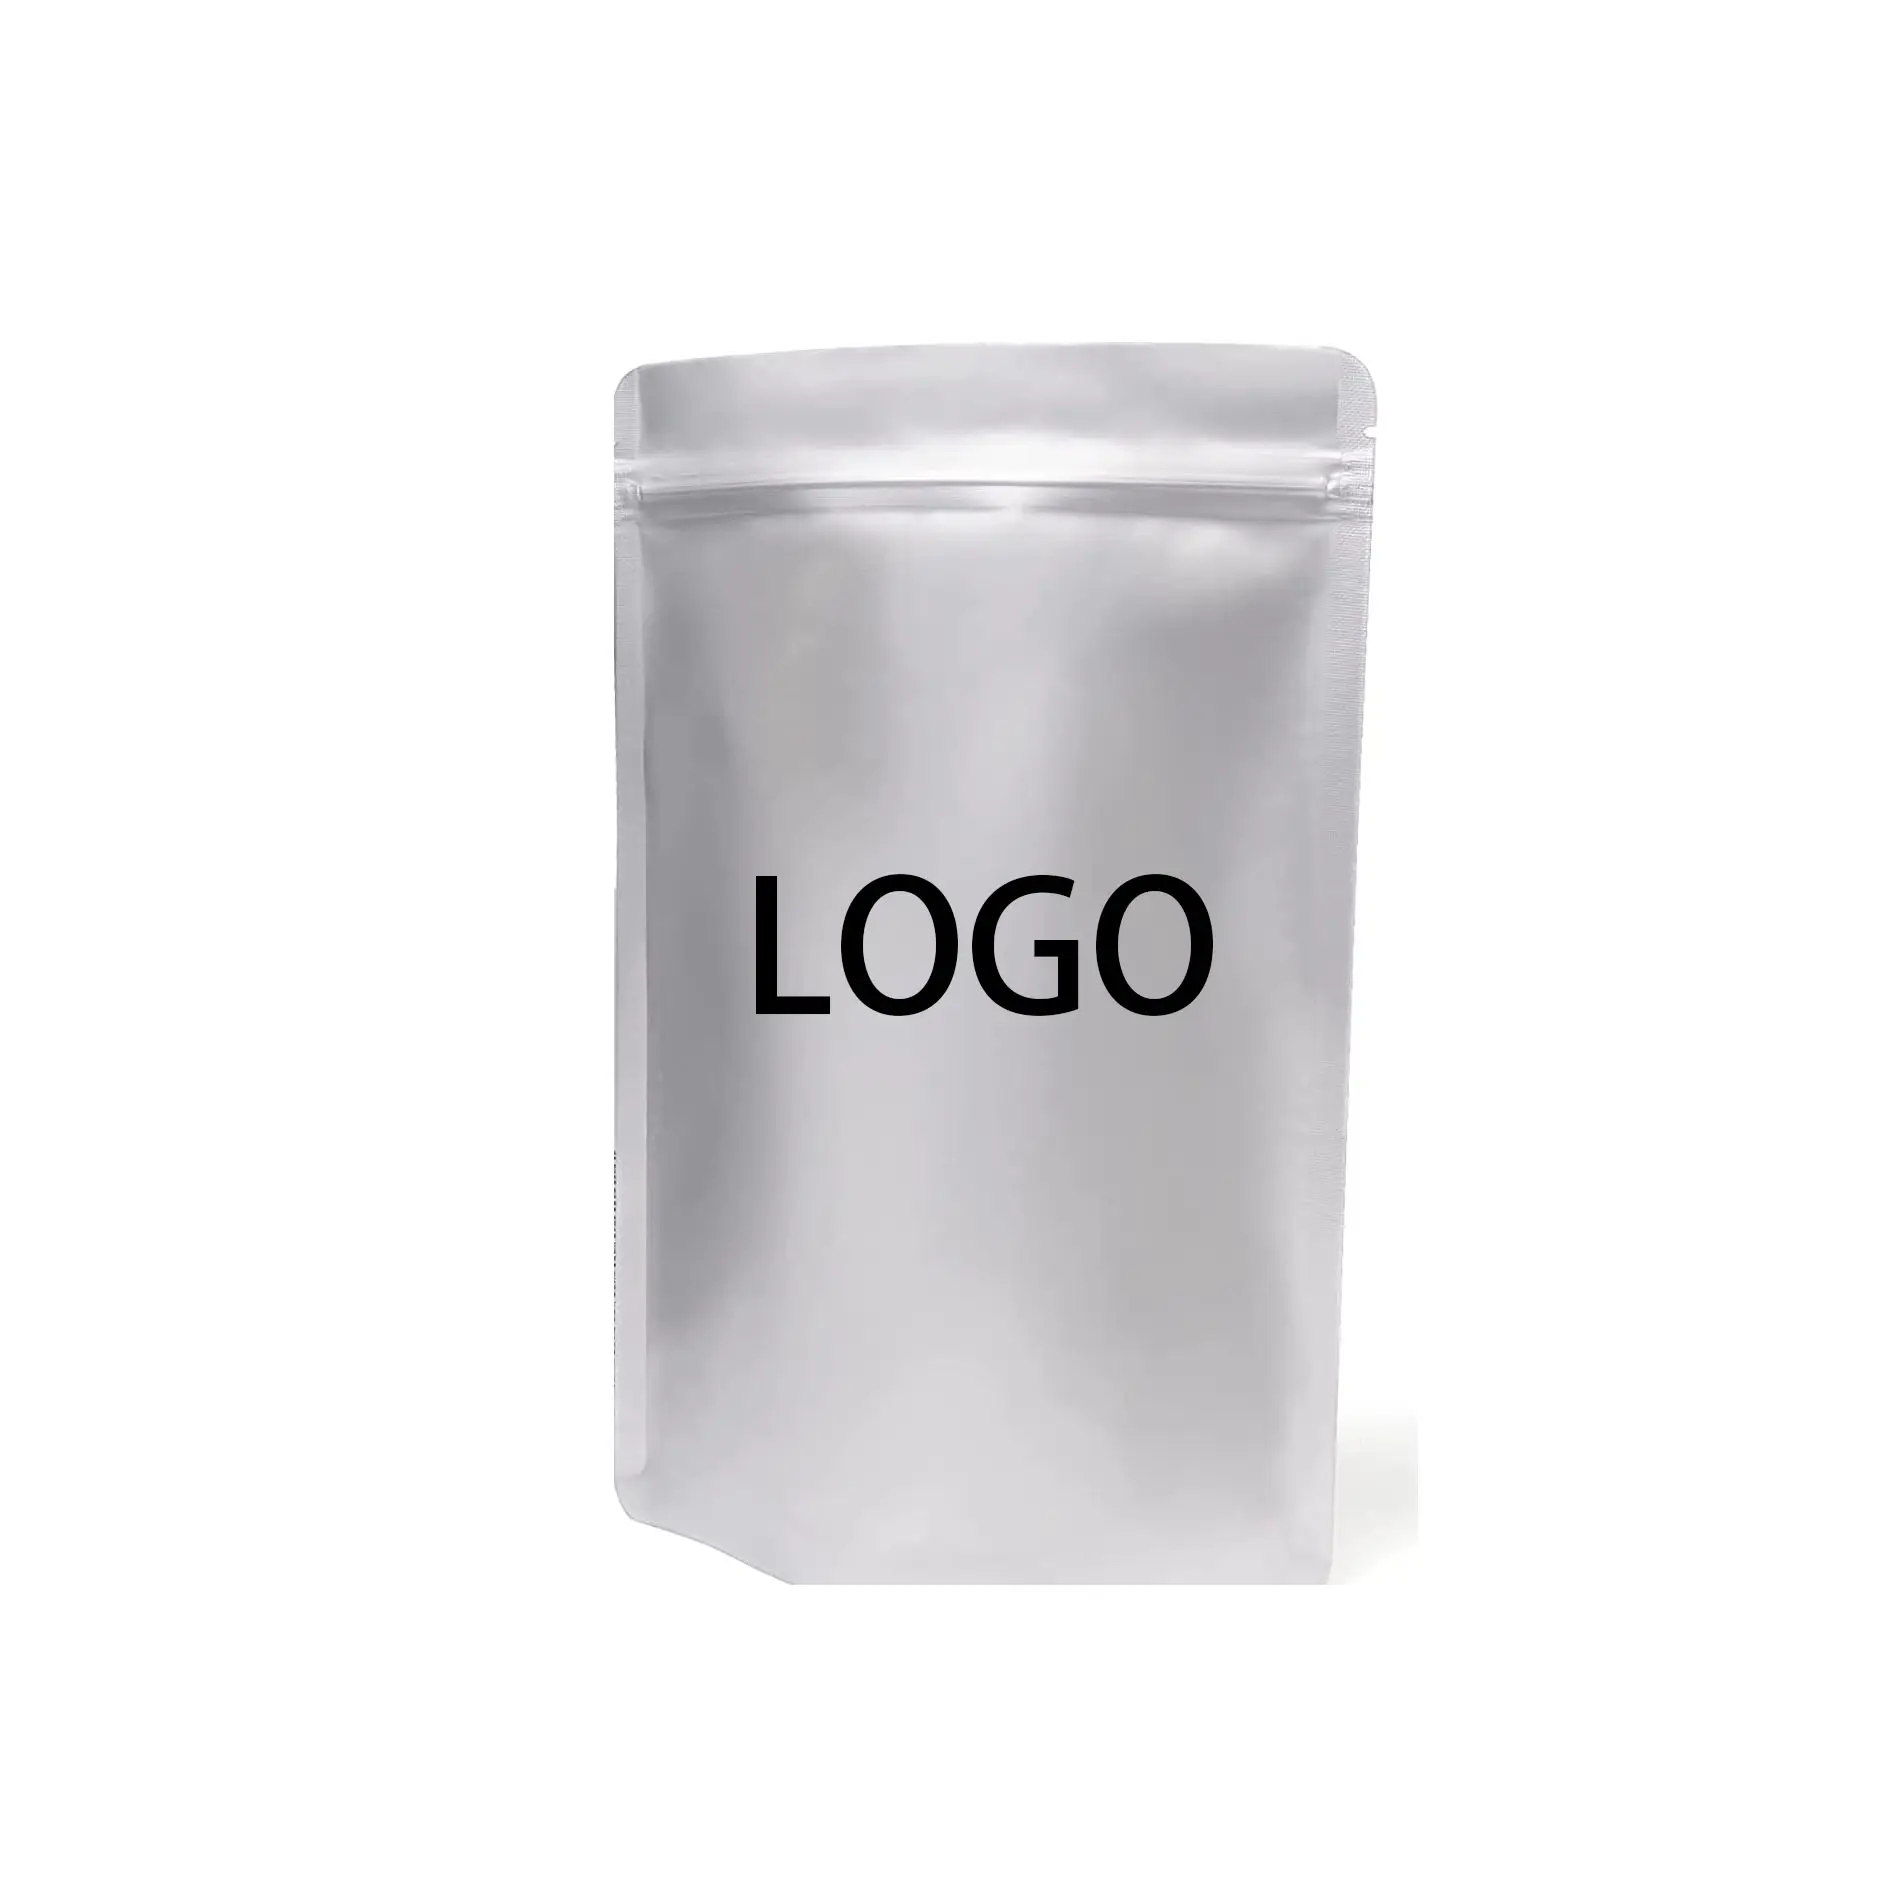 कम moq कस्टम लोगो प्रिंट लैमिनेटेड प्लास्टिक जिपर बैग कॉफी पैकेज रीसेबल स्टैंड अप फूड पाउच